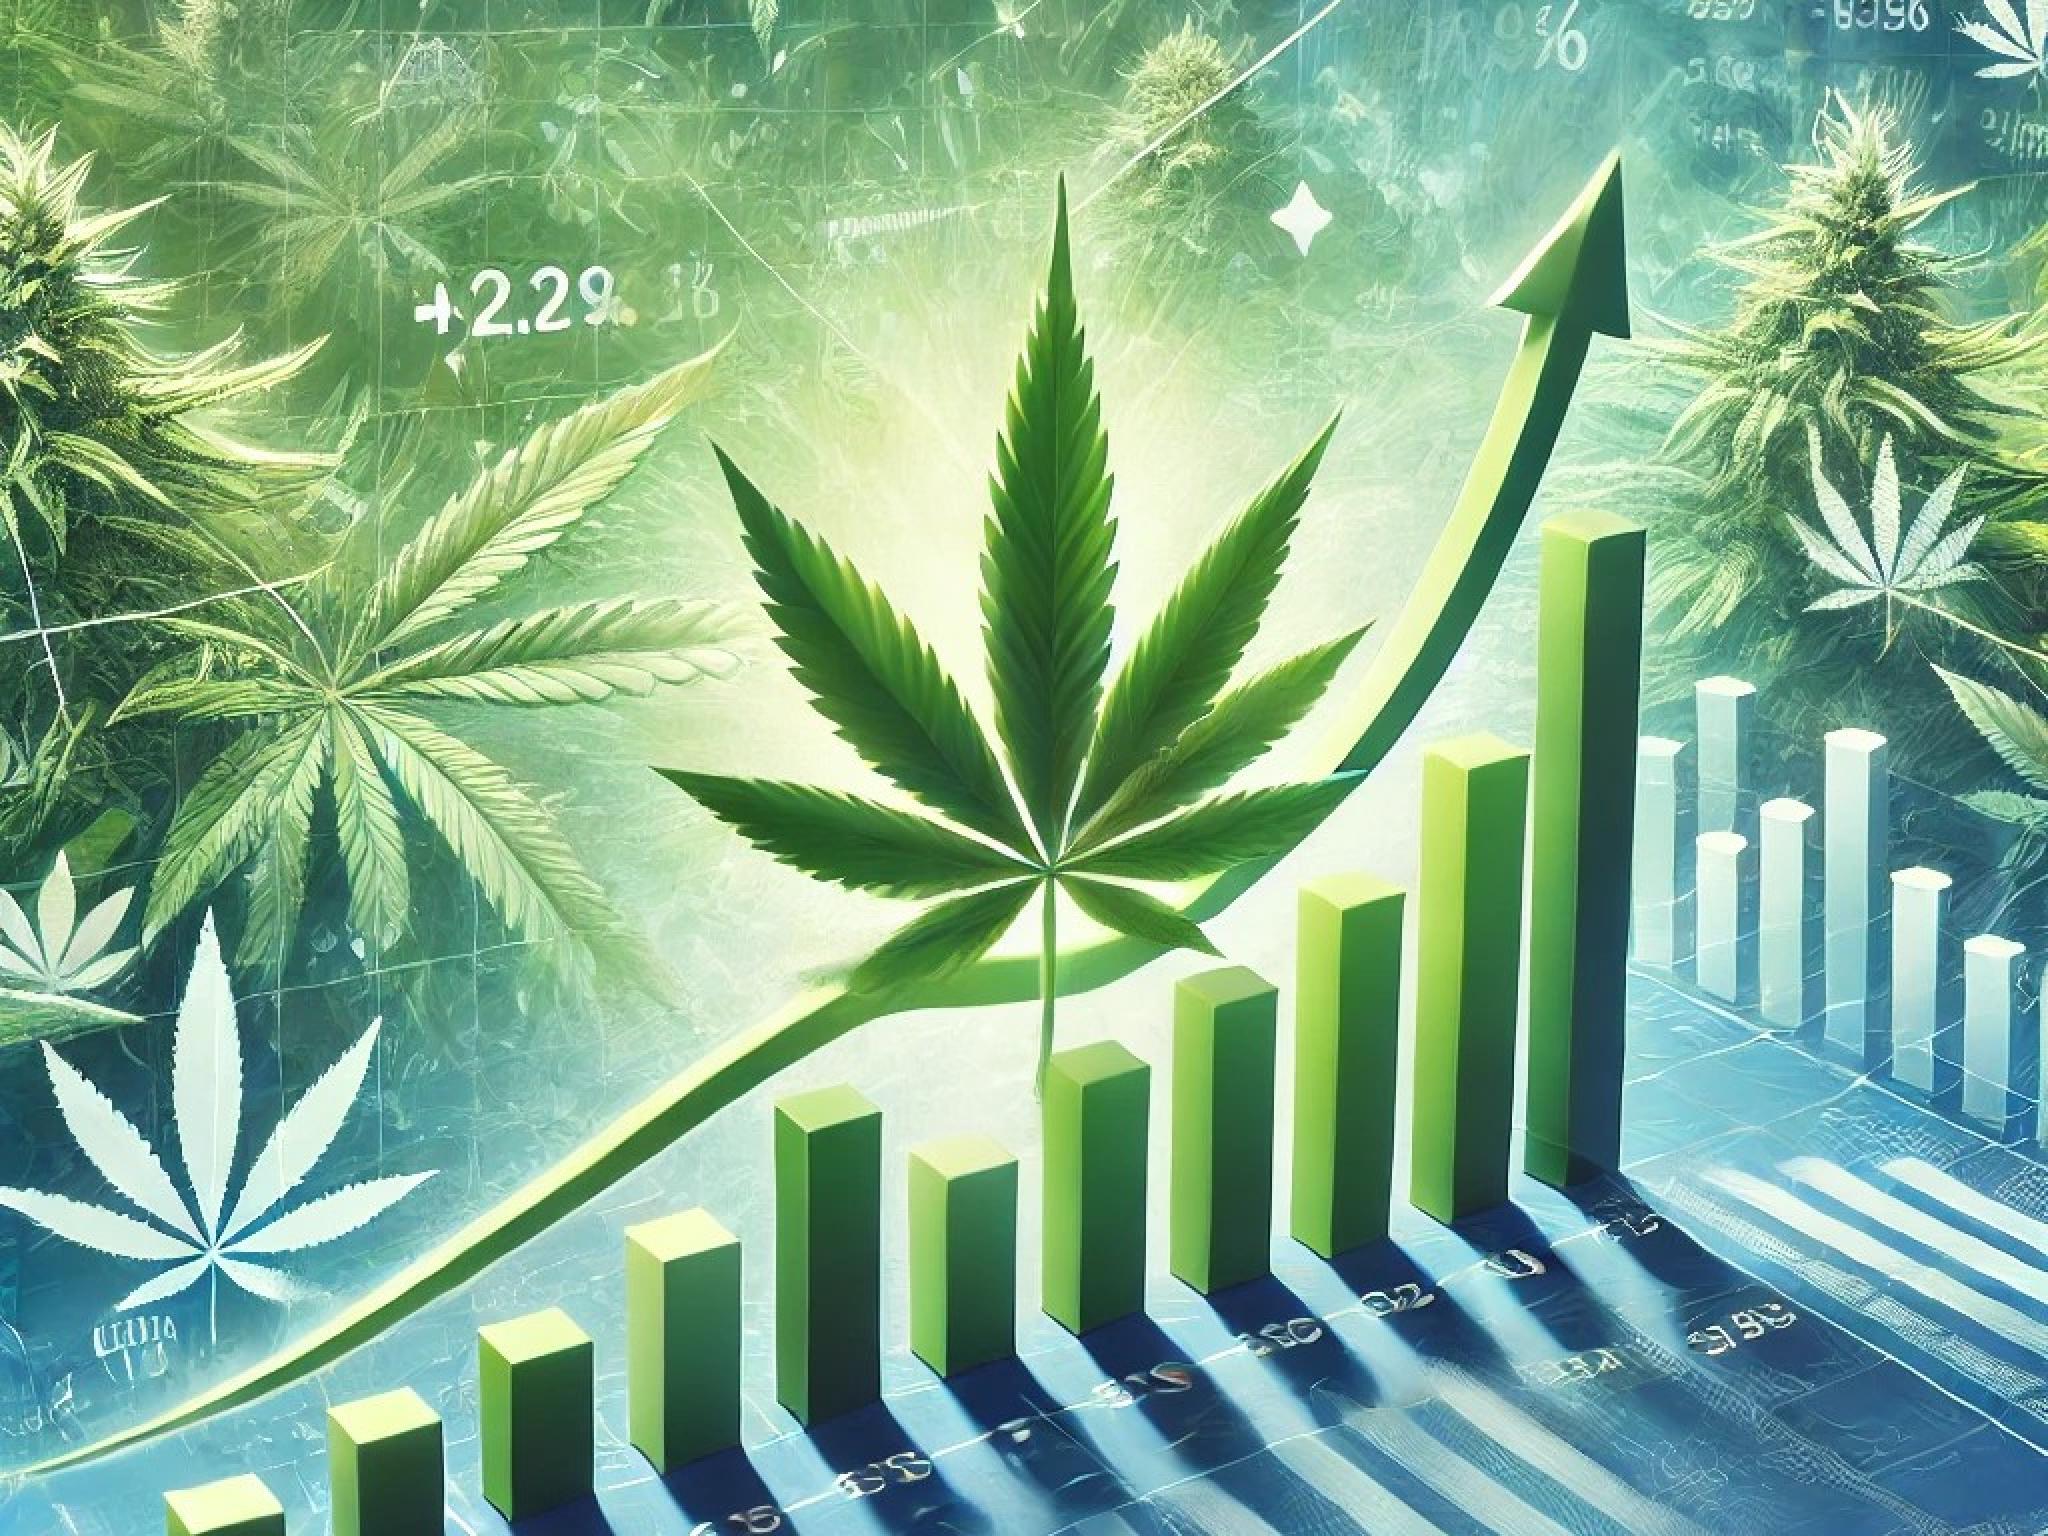  cannabis-stocks-react-to-biden-announcement-mondays-closing-market-moves 